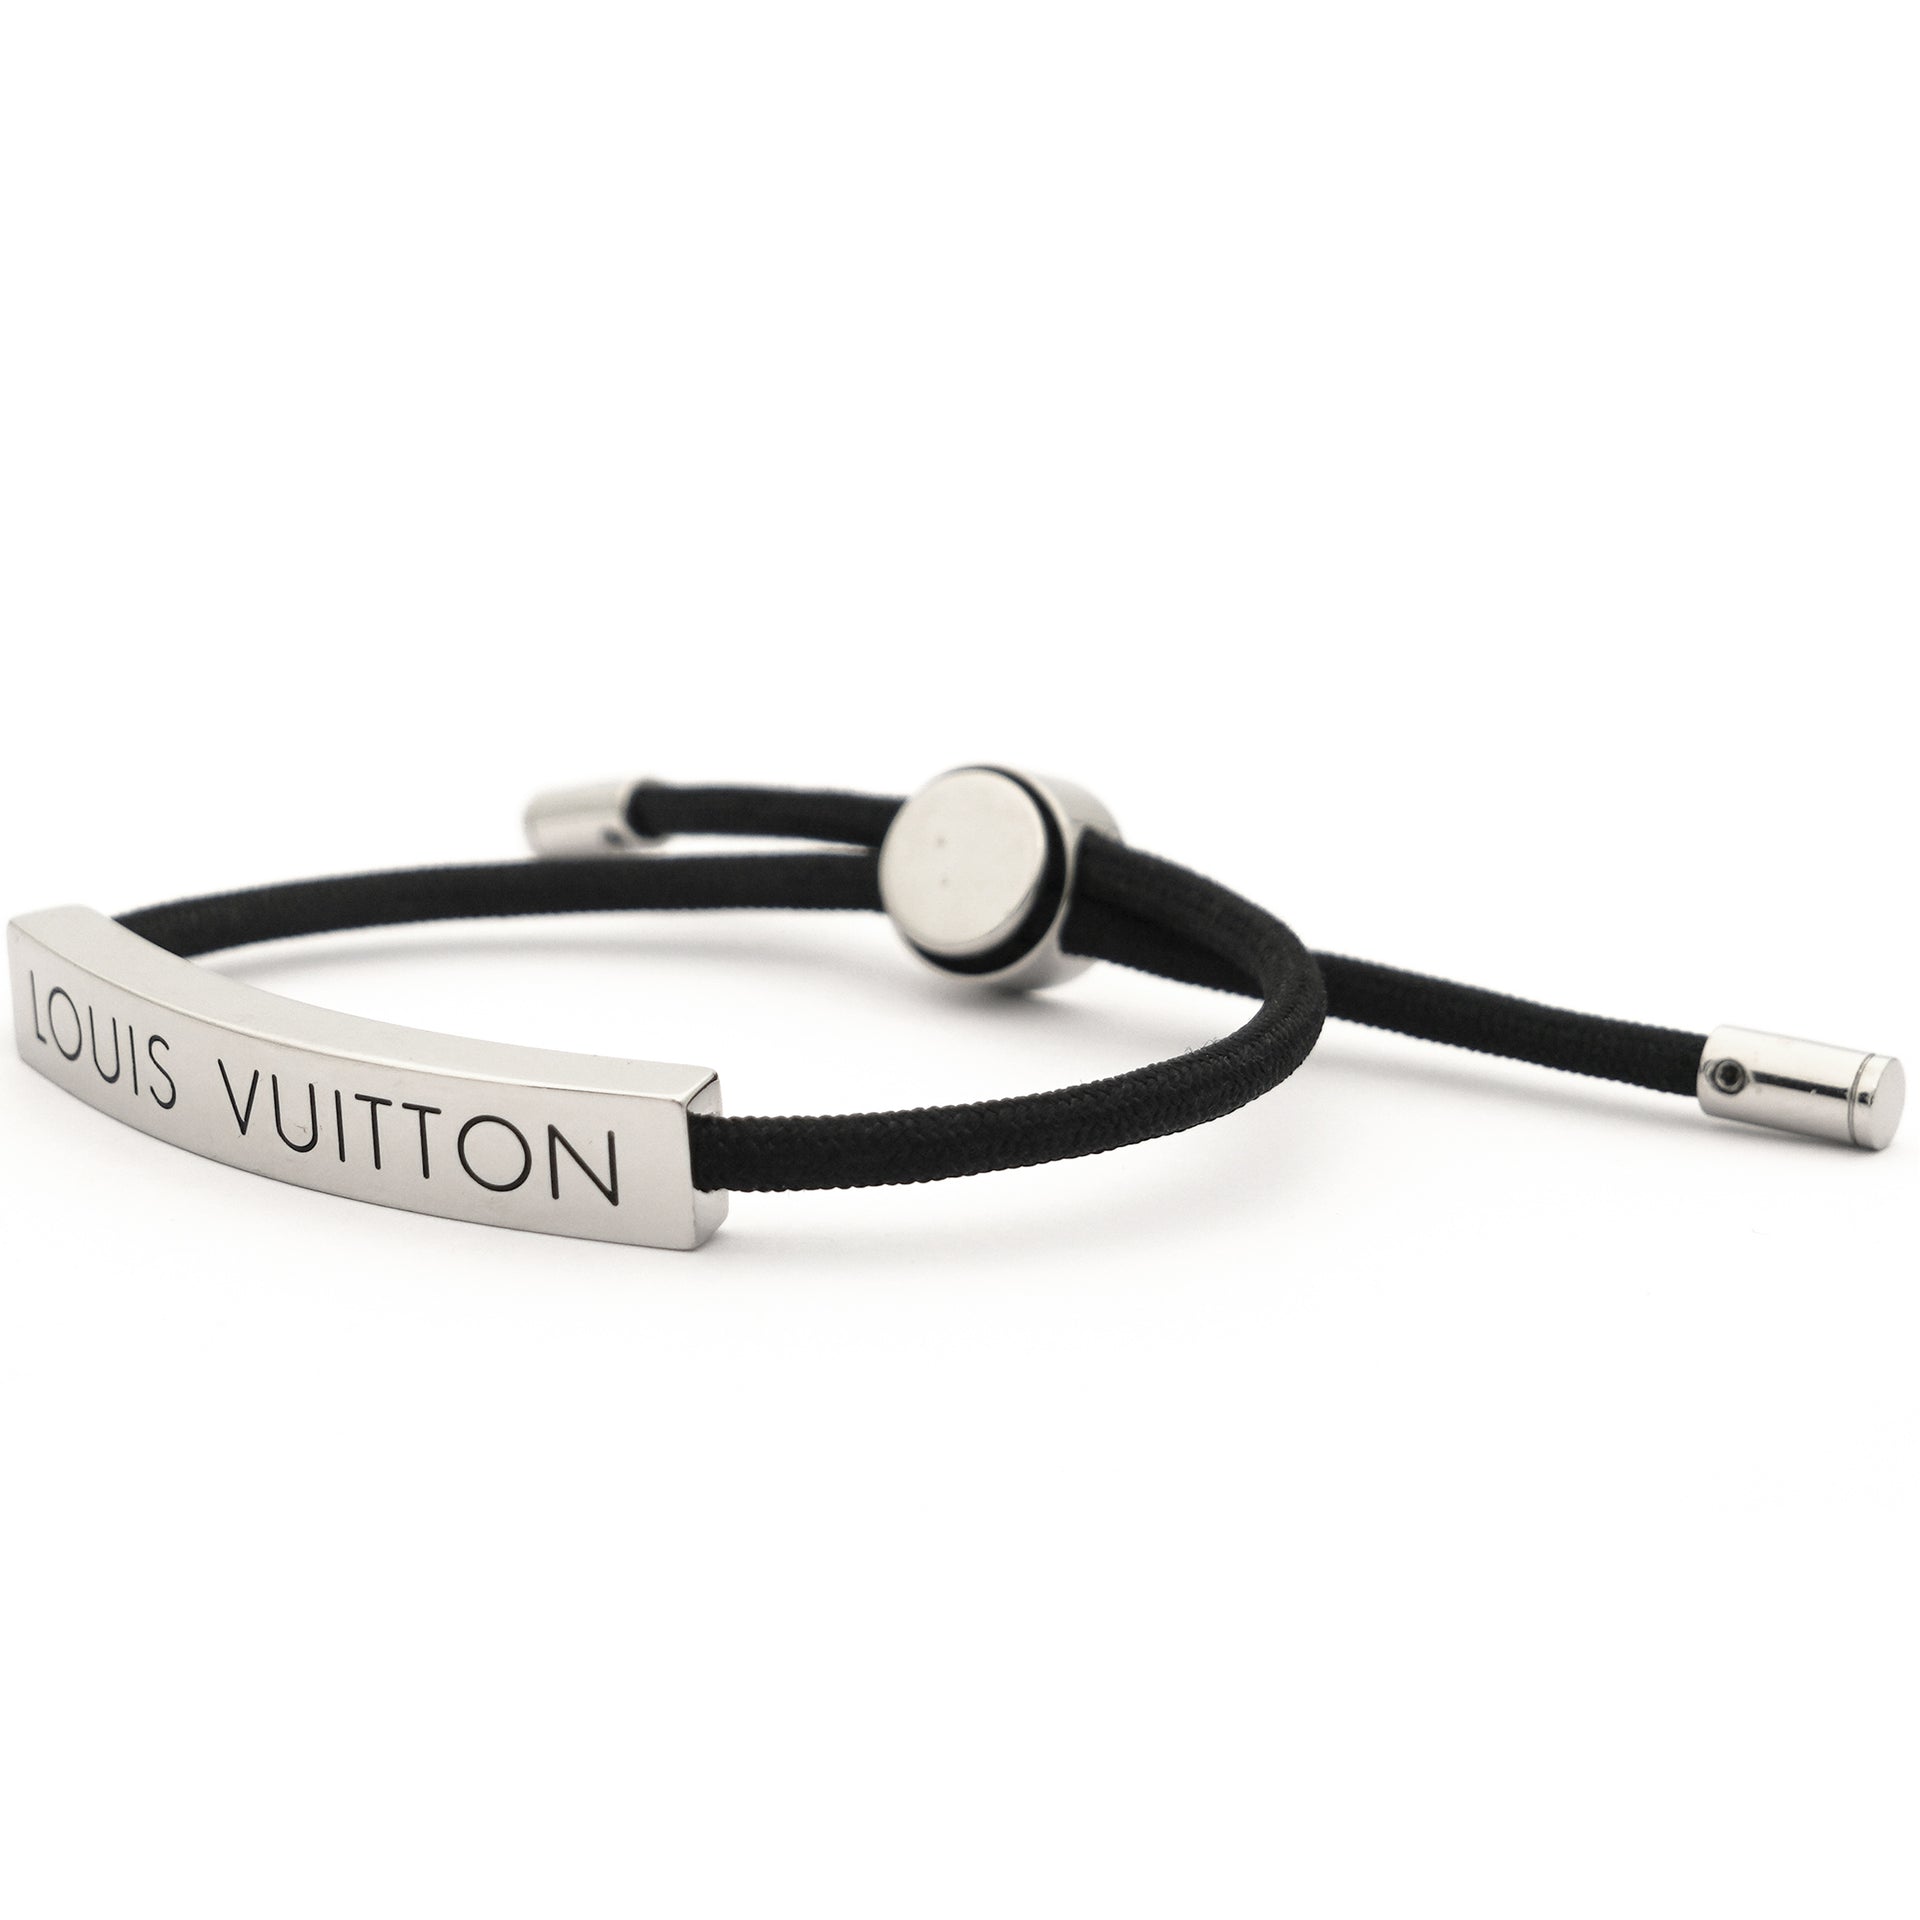 LV Circle Reversible Bracelet - Louis Vuitton ®